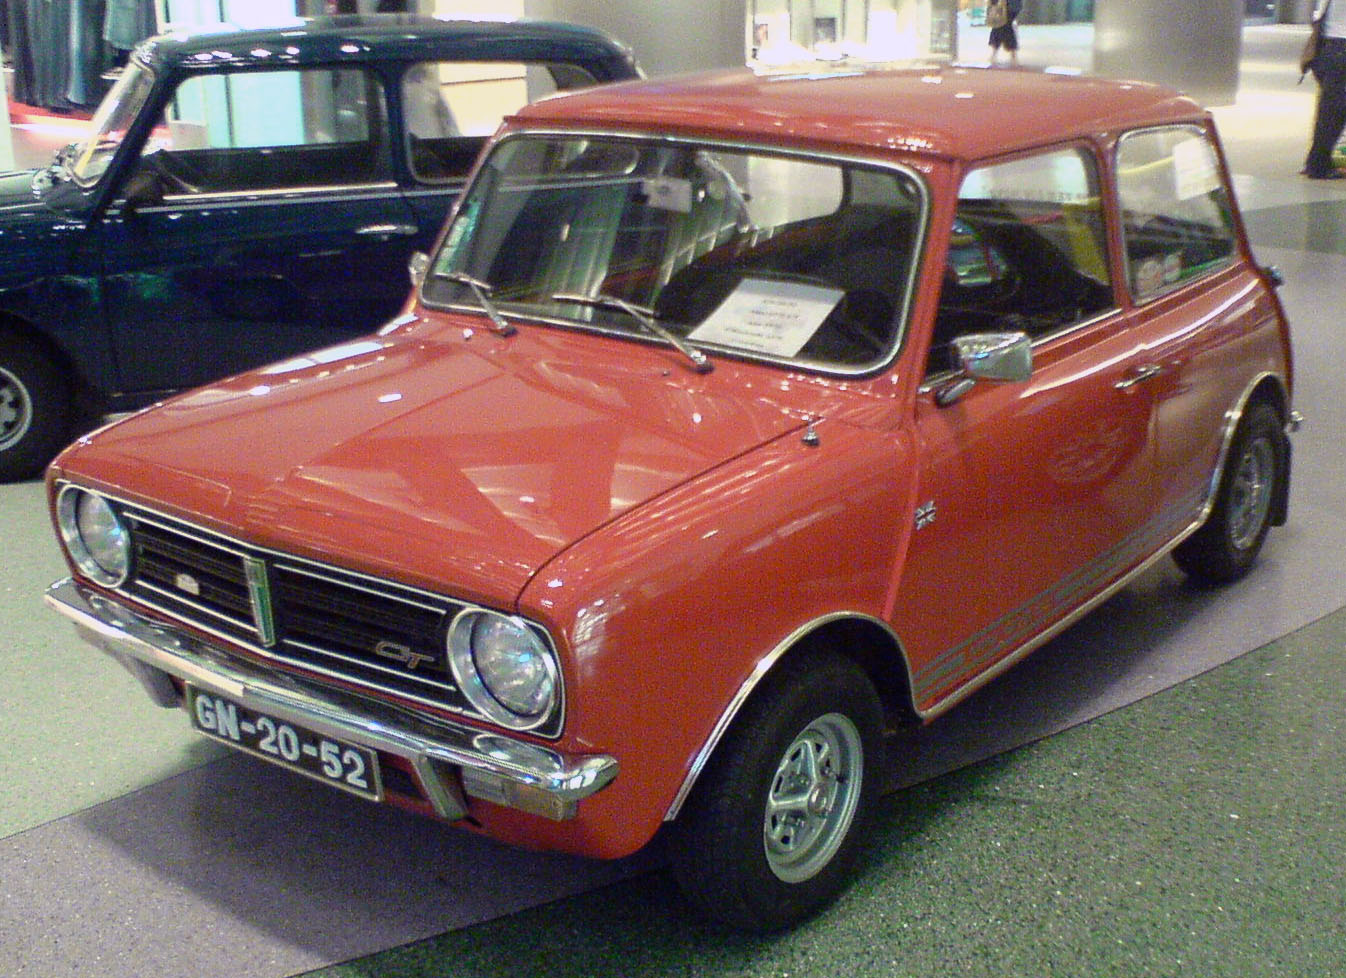 File:Mini 1275 GT, front.jpg - Wikimedia Commons